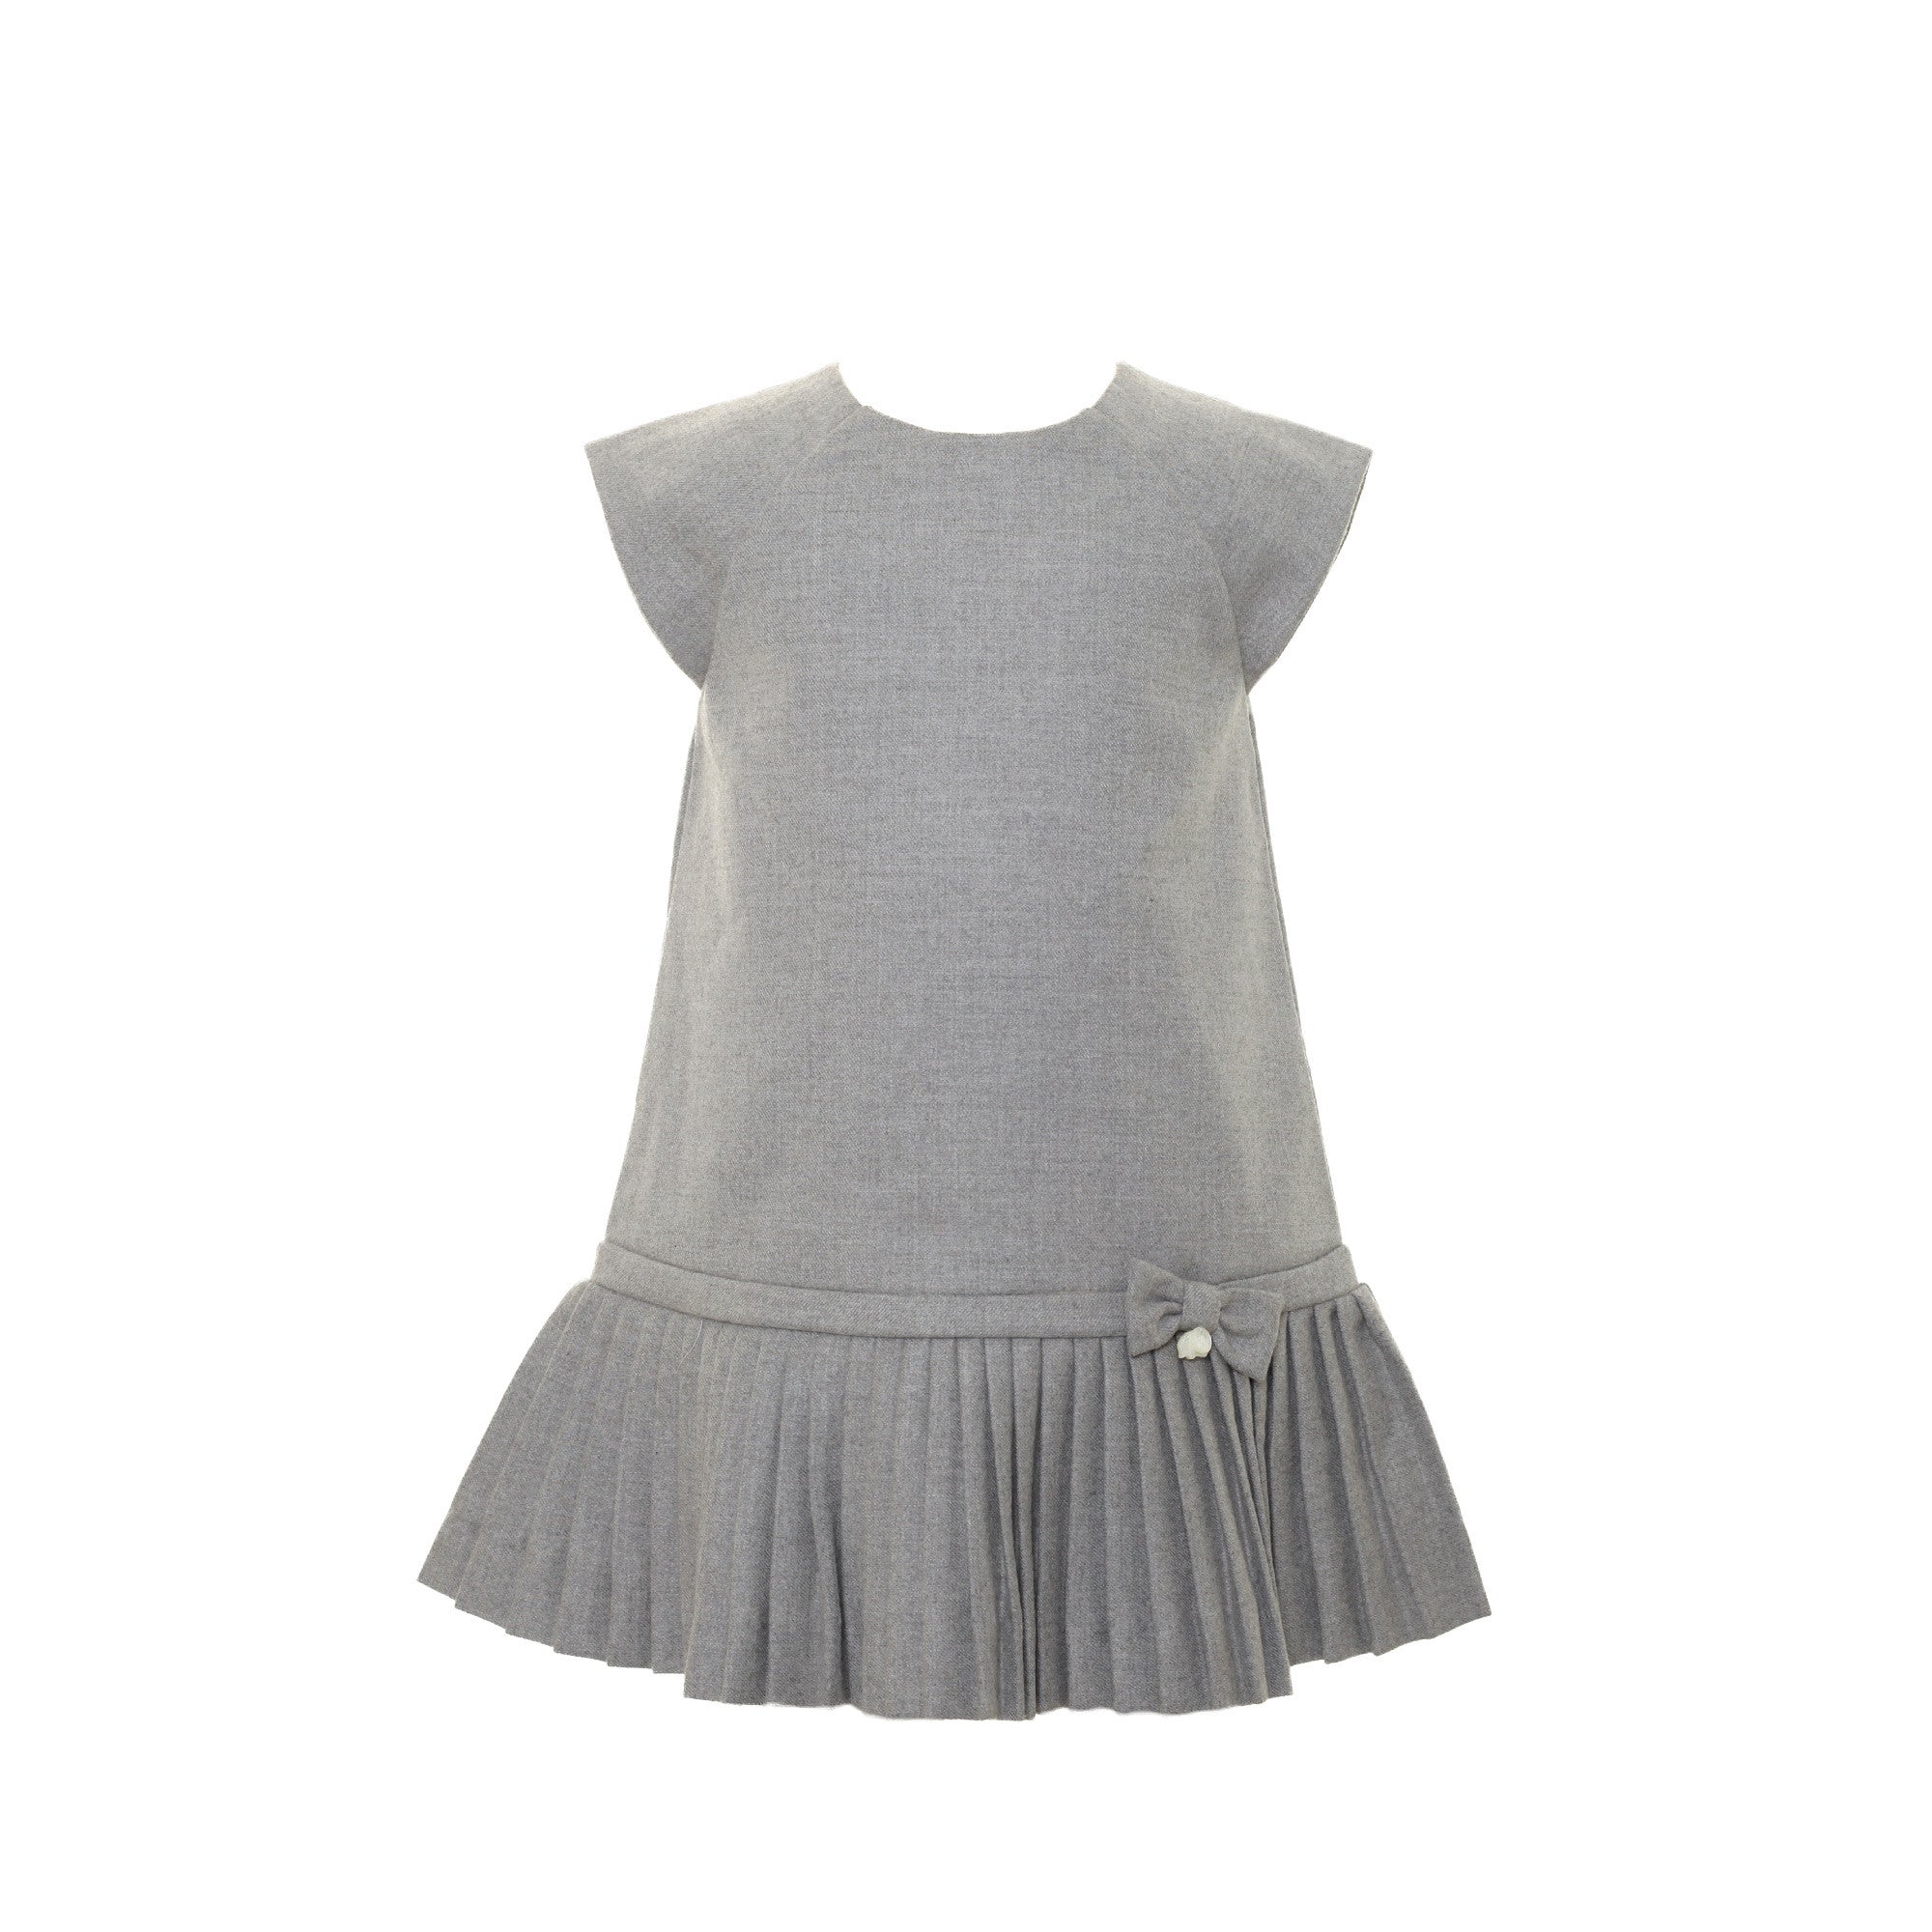 Baby Girls Dark Grey Dress With Bow Trims - CÉMAROSE | Children's Fashion Store - 1